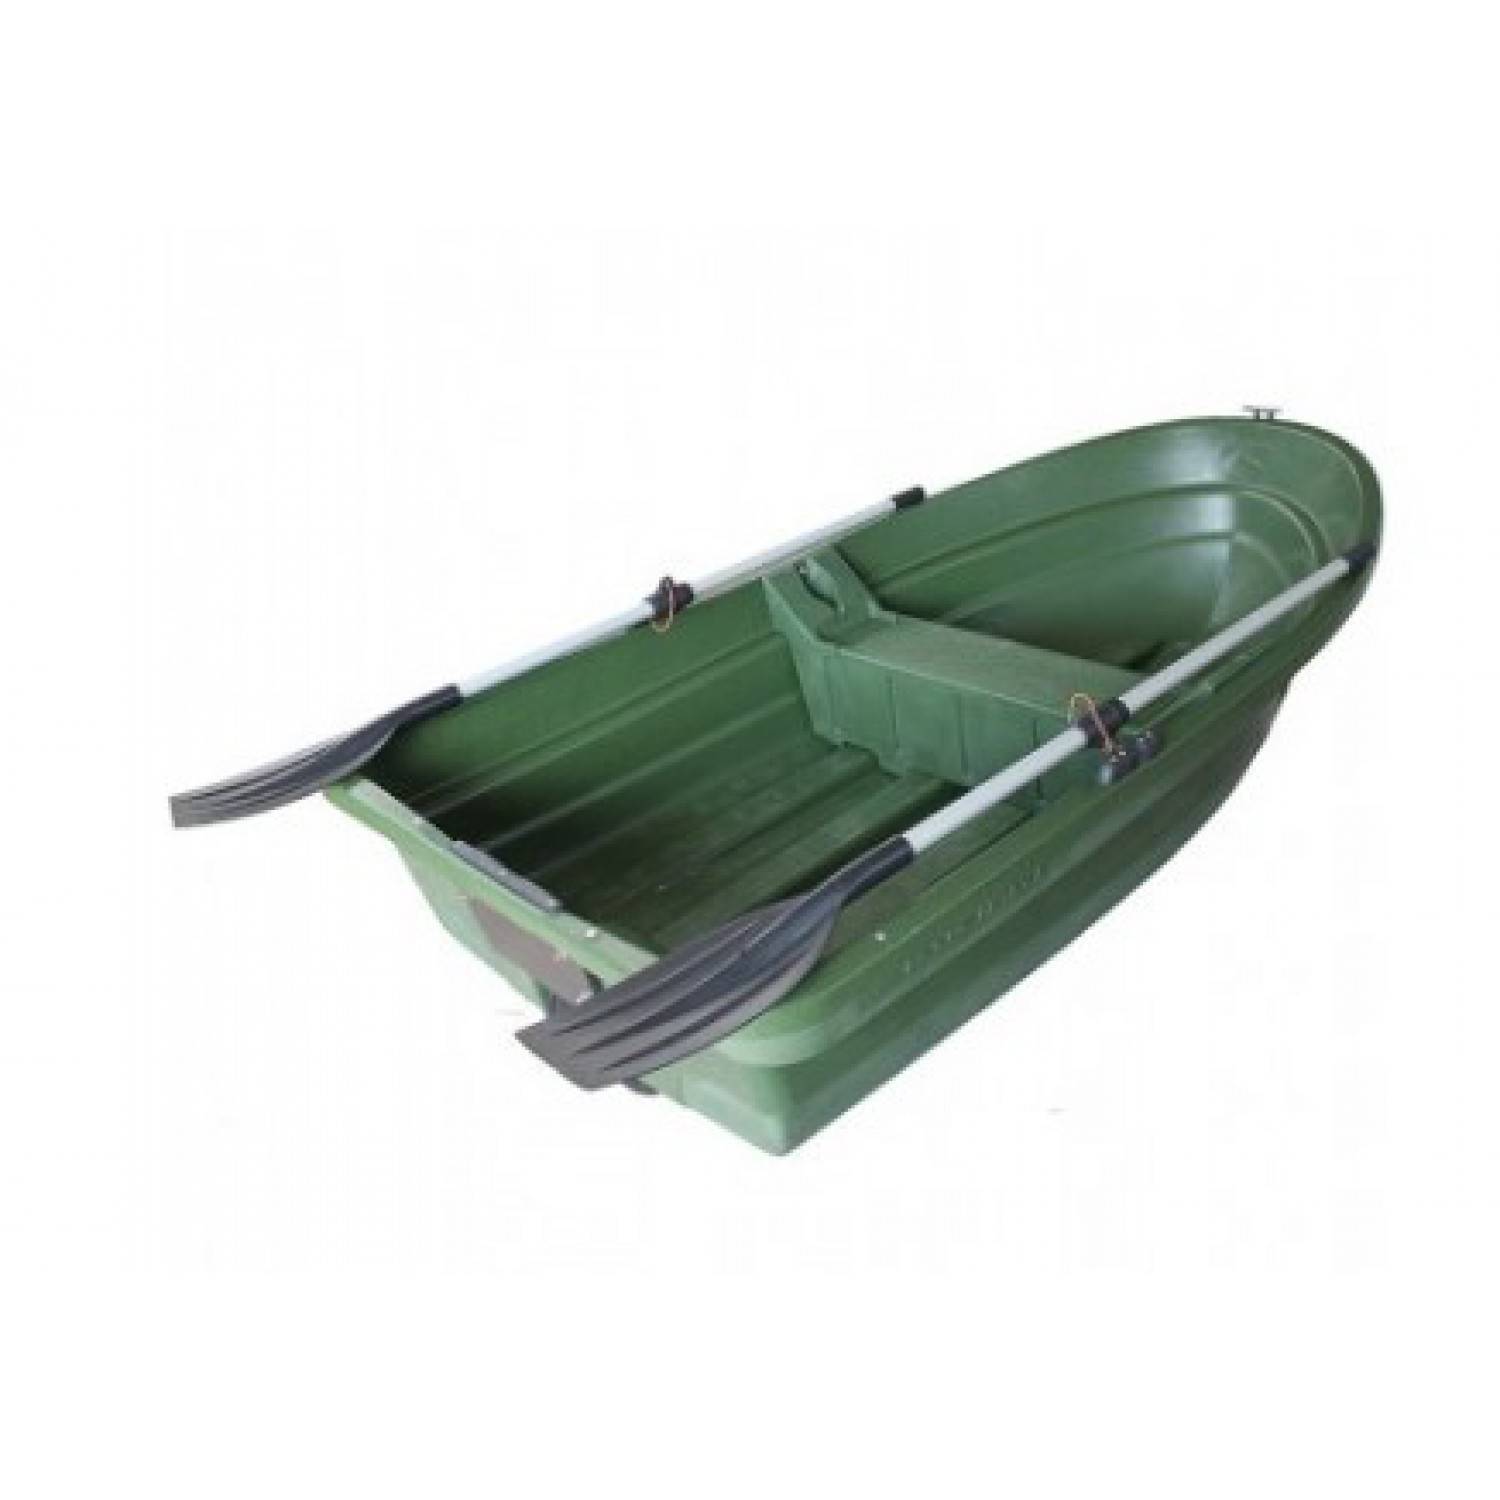 О лодках колибри – особенности лодок и производителя